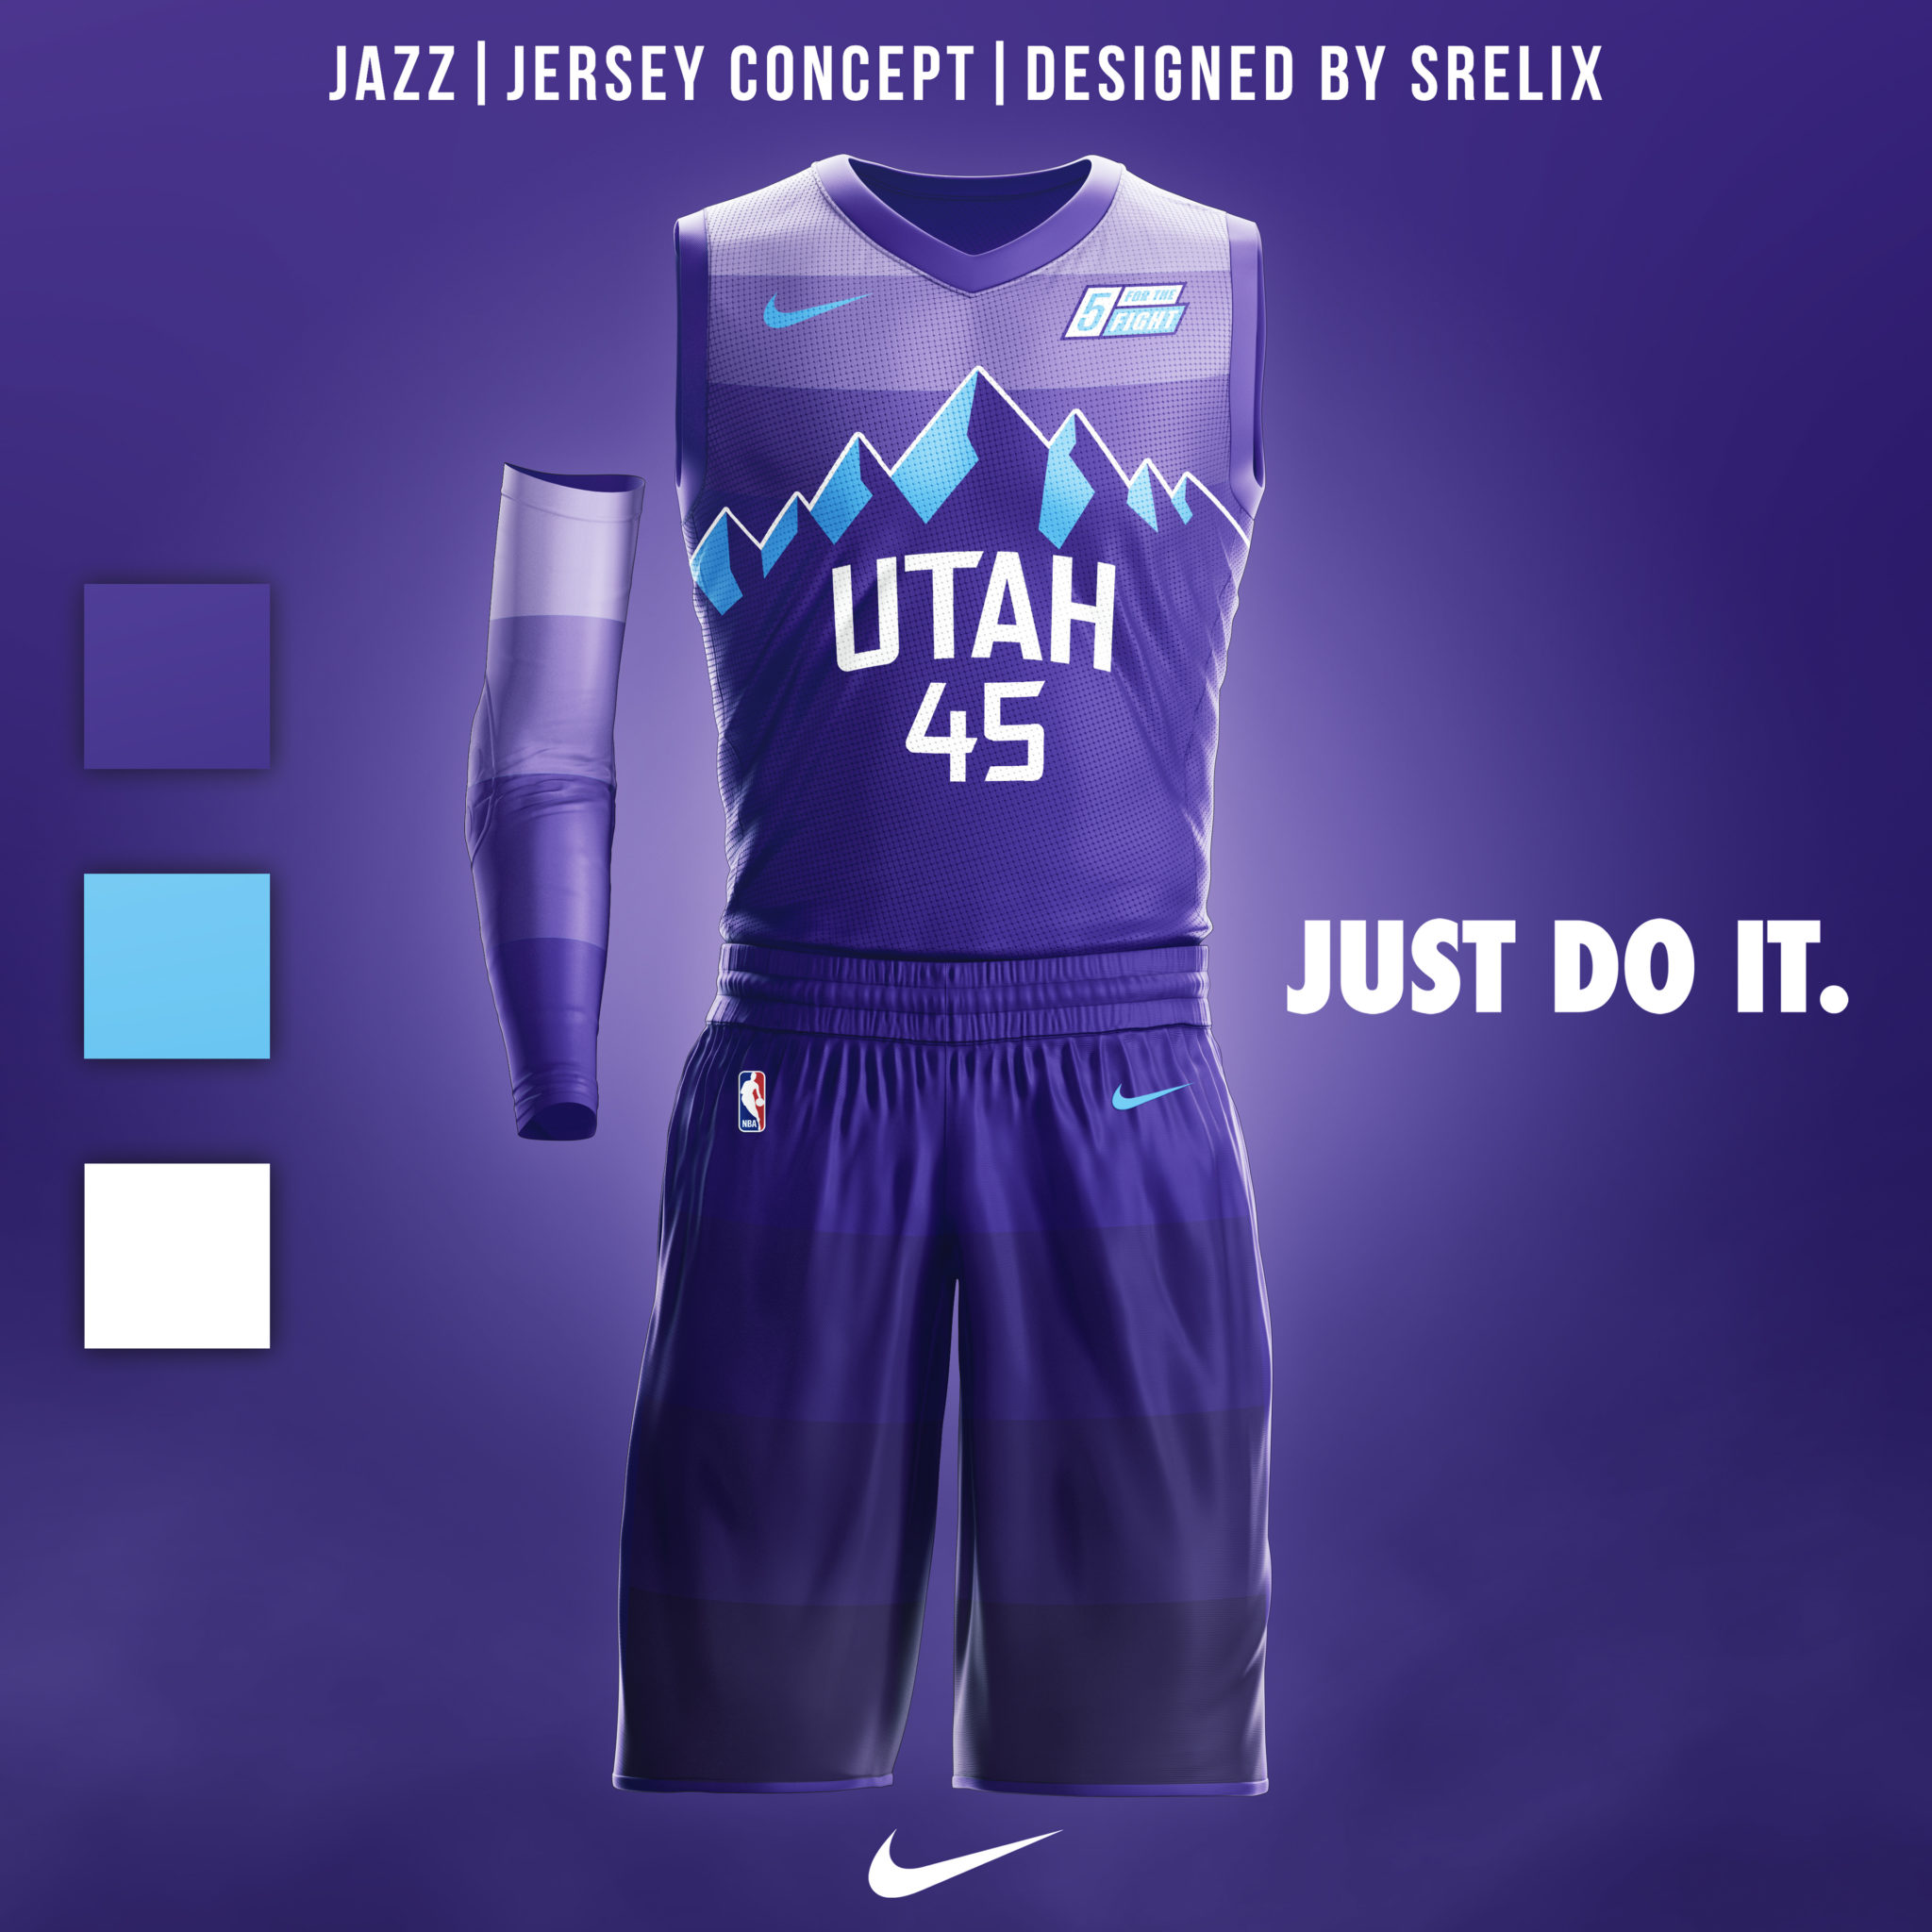 Utah Jazz incorporating "Mountain" jerseys next season?